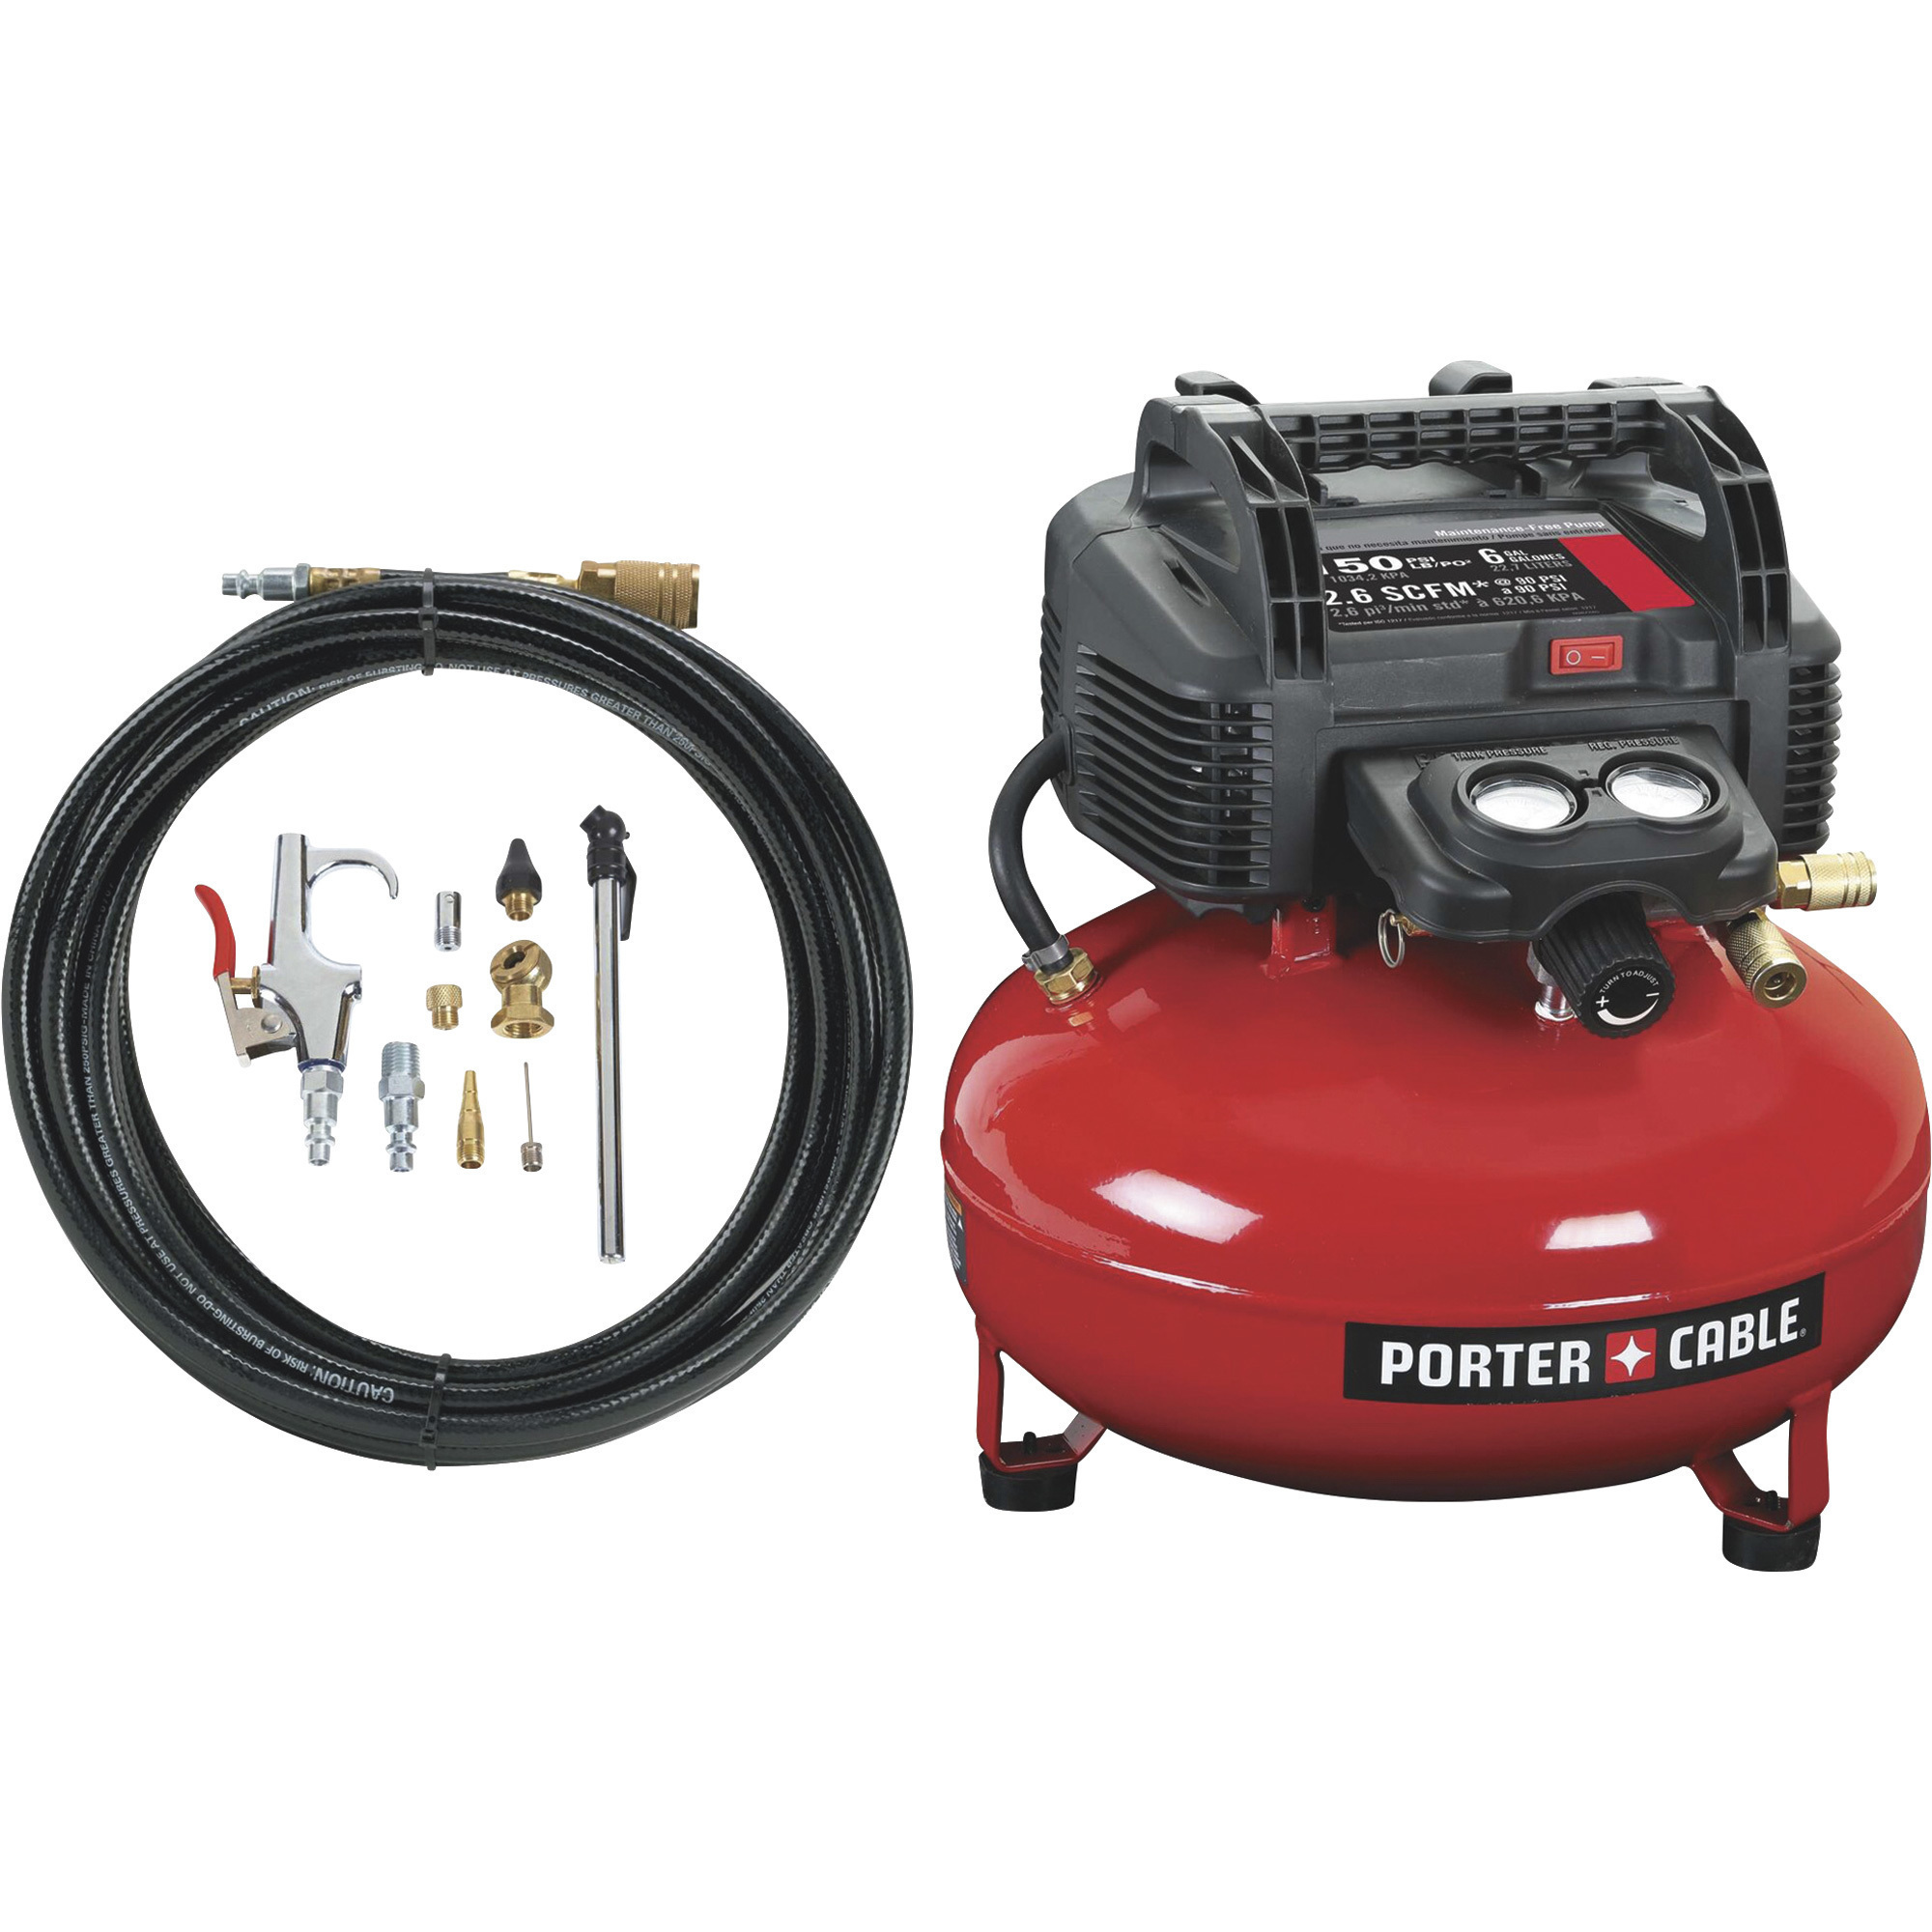 Porter Cable Portable Electric Pancake Air Compressor Kit, 0.8 HP, 6-Gallon, 2.6 CFM, Model C2002-WK